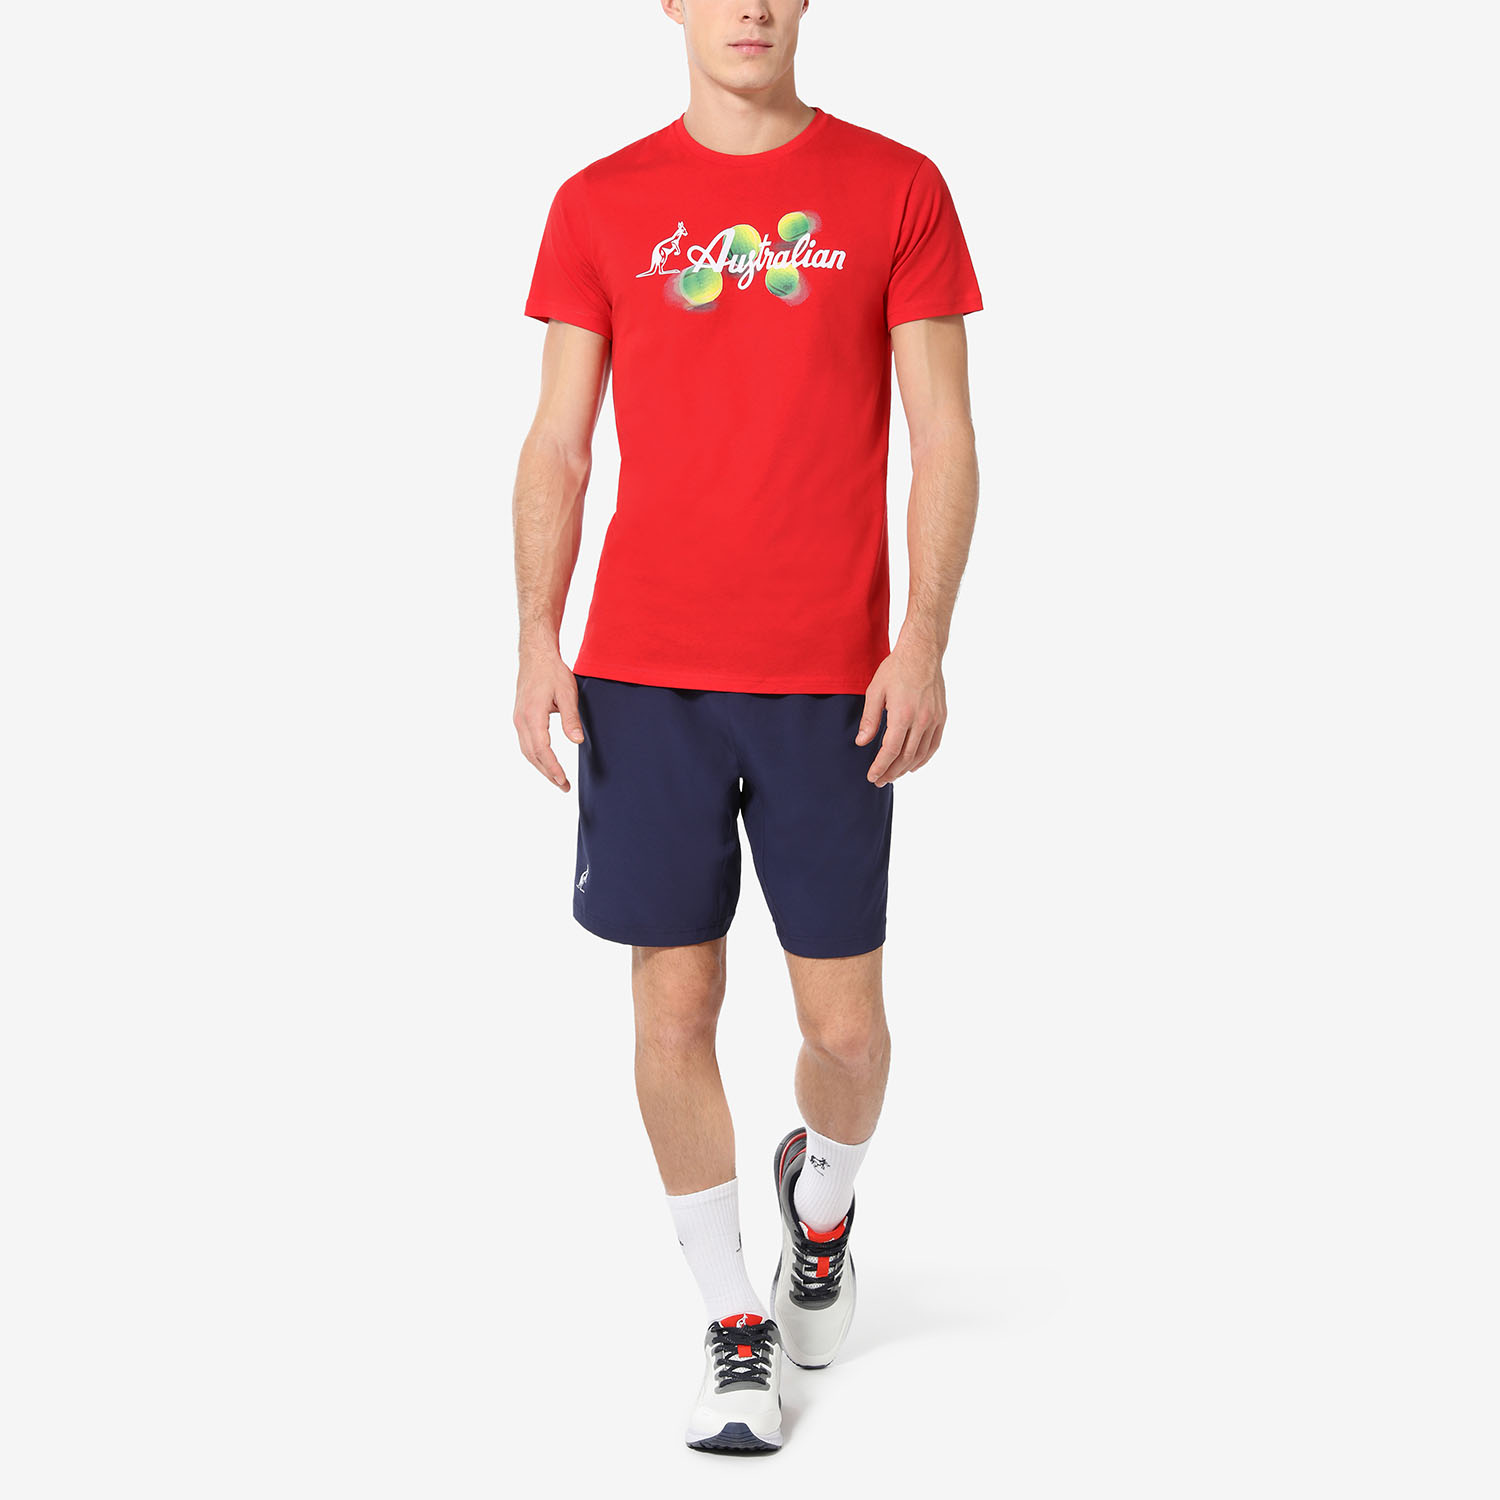 Australian Balls T-Shirt - Rosso Vivo